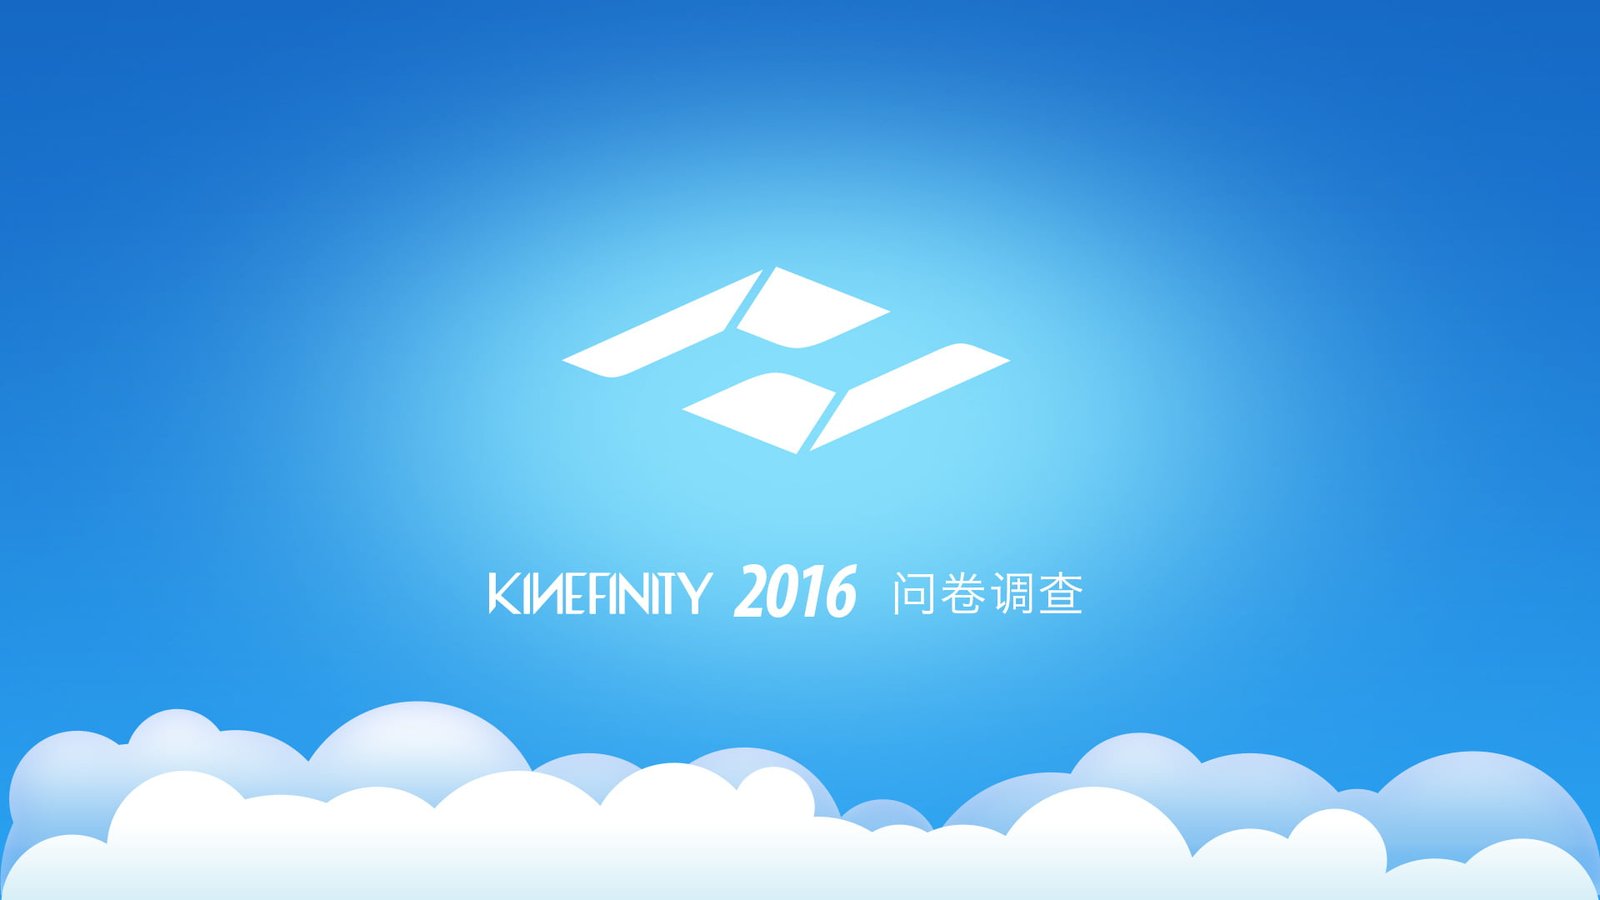 KINEFINITY 2016 有奖问卷调查 - 影视工业网